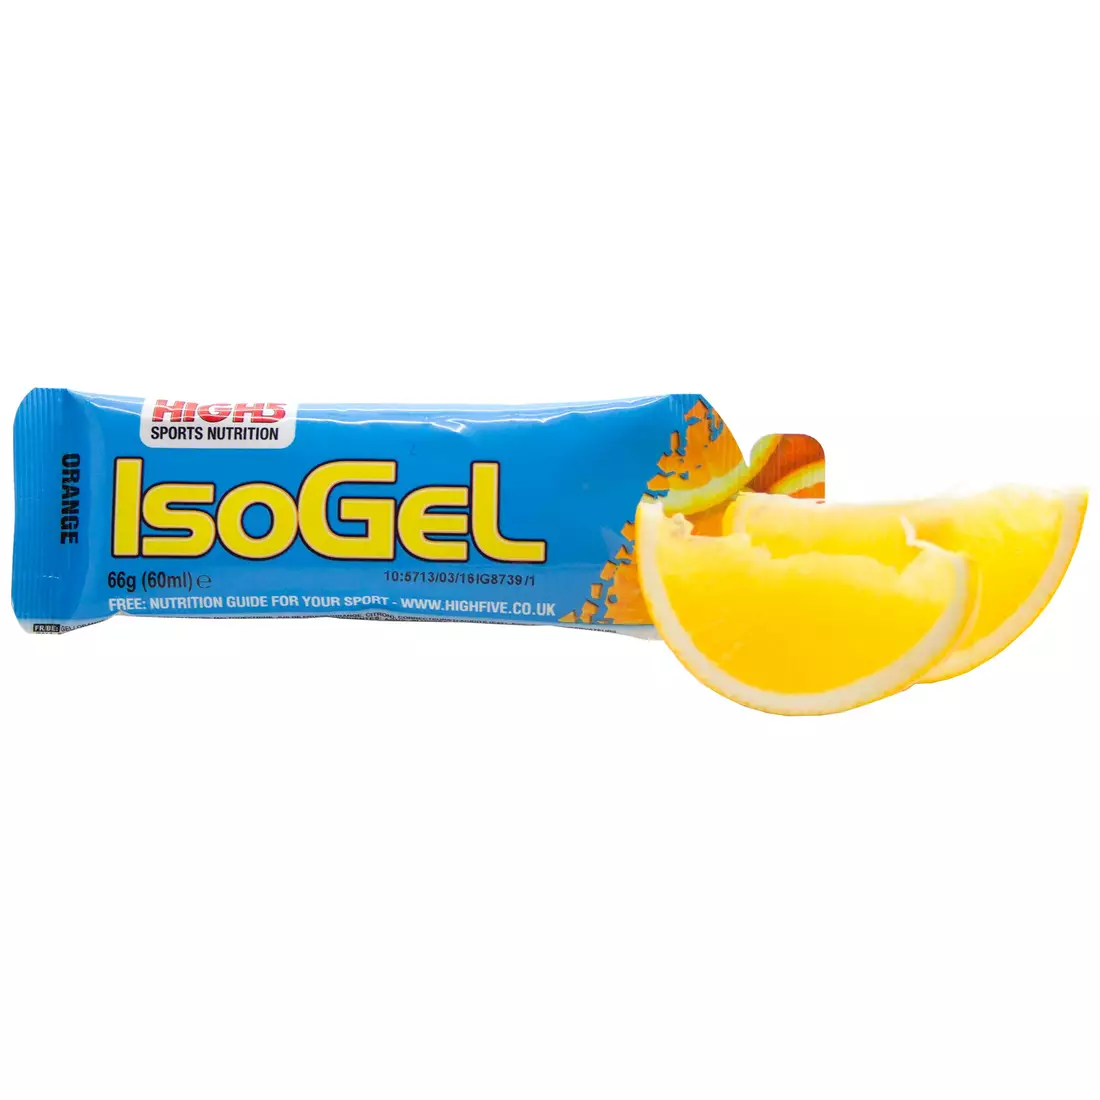 HIGH5 IsoGel isotonischer Gelgeschmack: Orangenkapazität. 60 ml